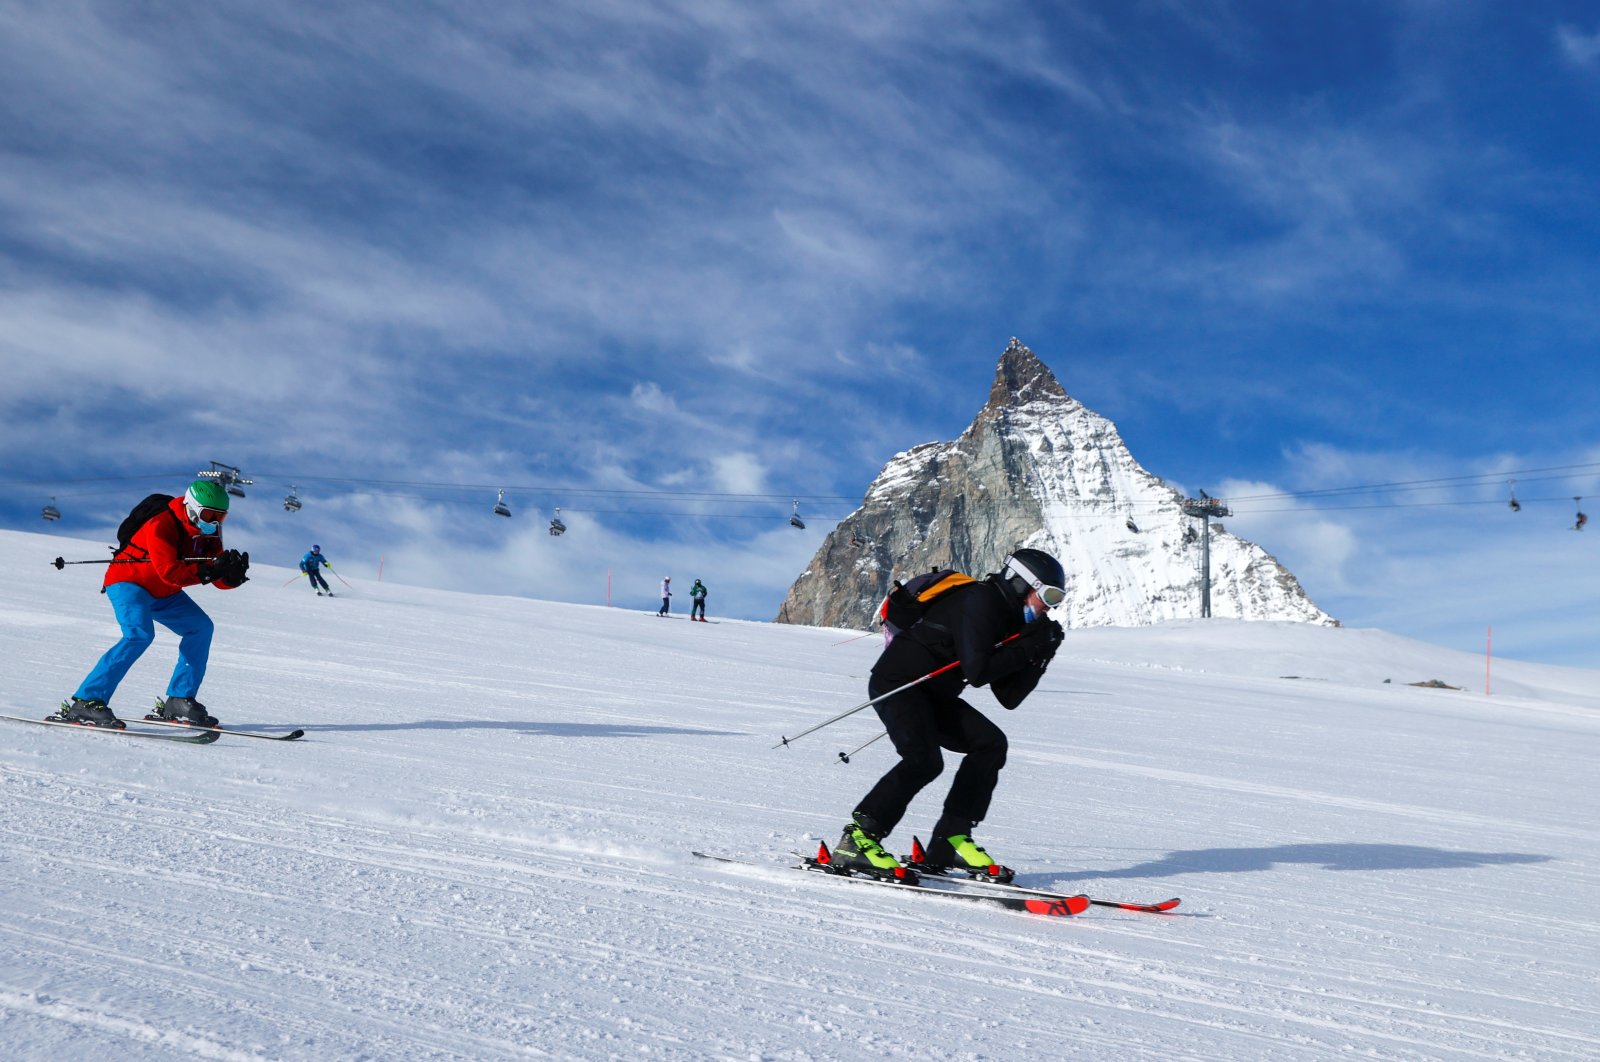 People wearing protective masks ski with the Matterhorn mountain in the background, amid the coronavirus pandemic, at the ski resort in Zermatt, Switzerland, Nov. 21, 2020. (Reuters Photo)